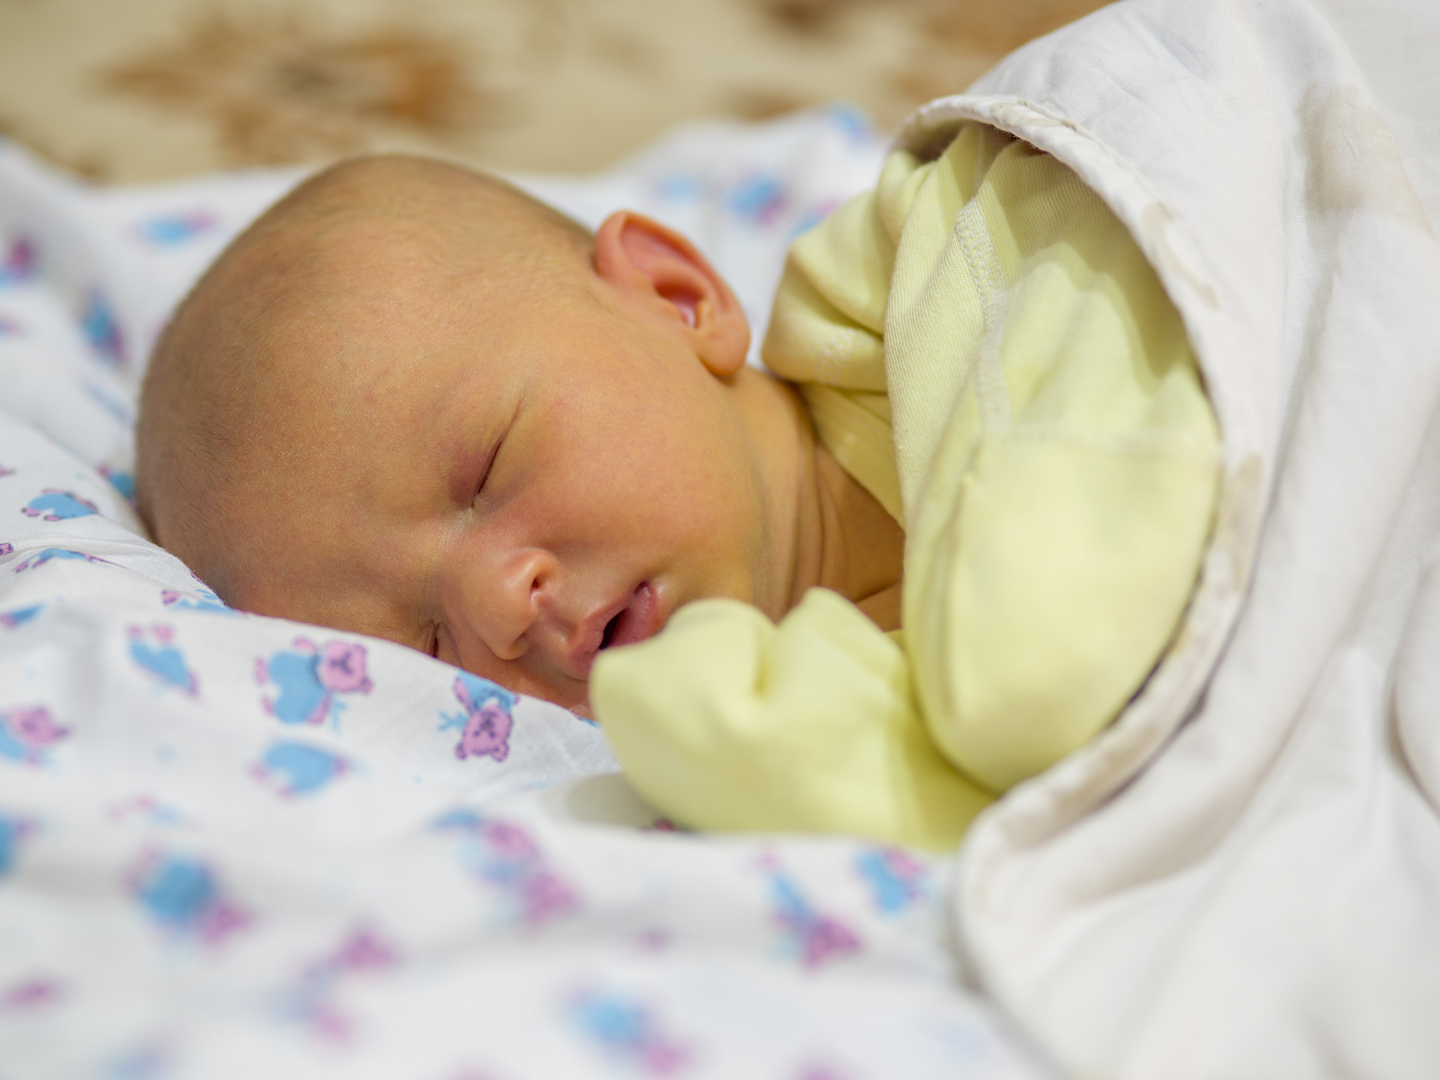 Jaundice in a newborn baby